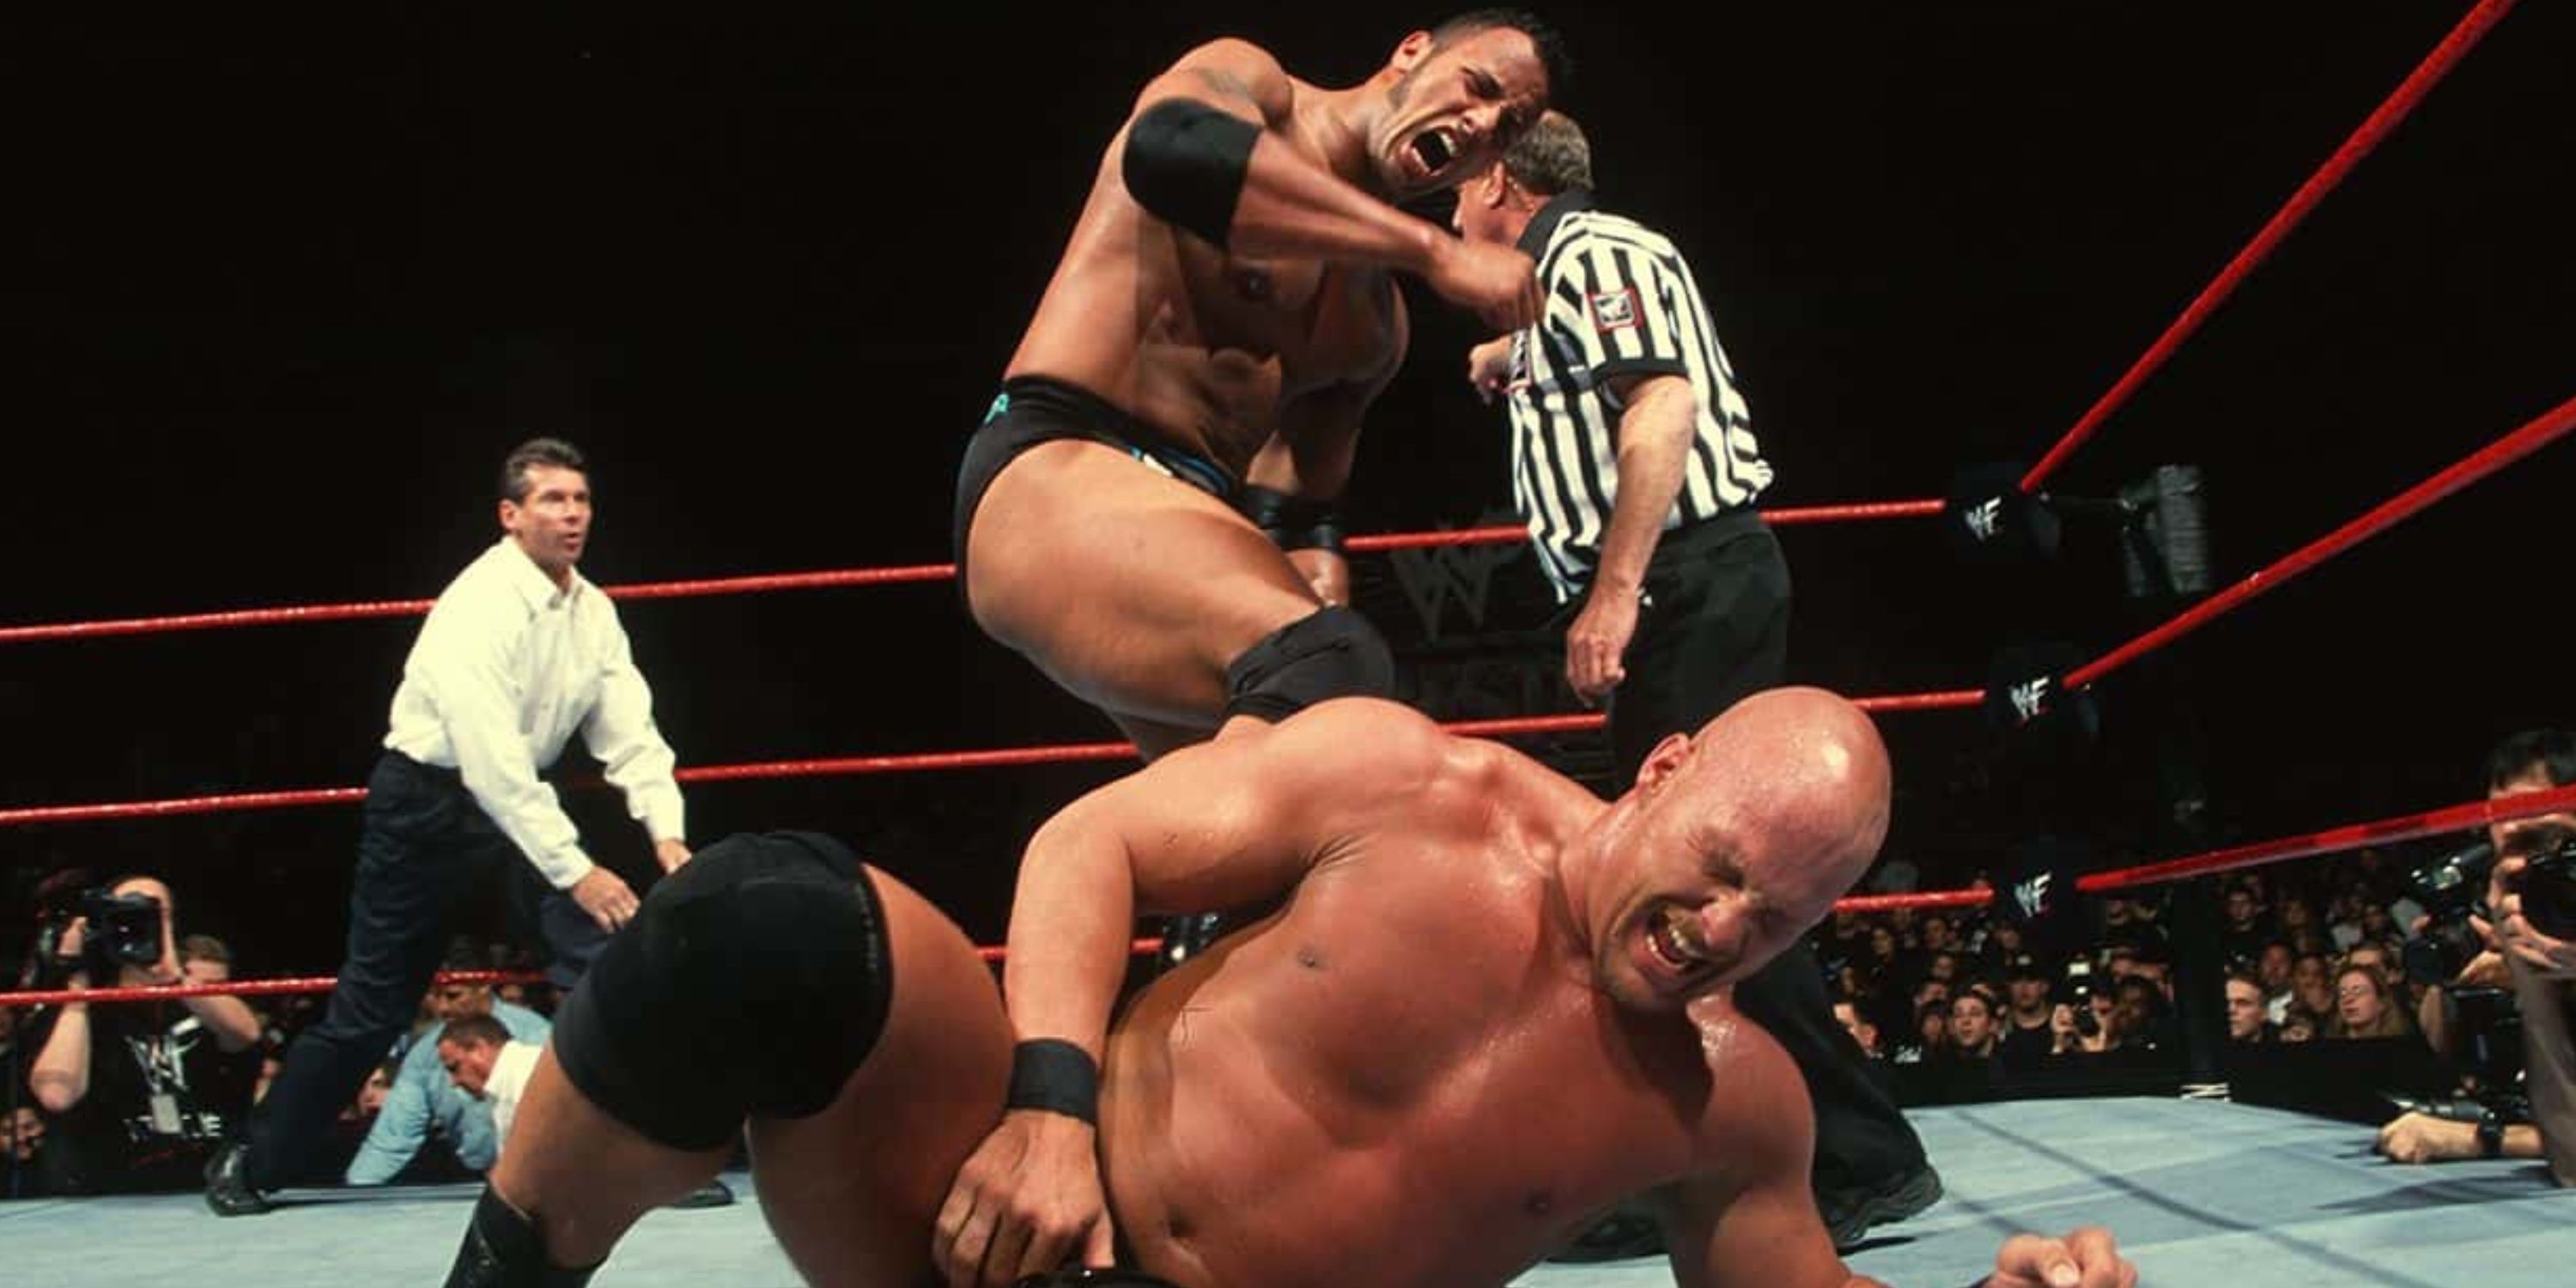 The Rock vs Stone Cold Steve Austin at WrestleMania 15